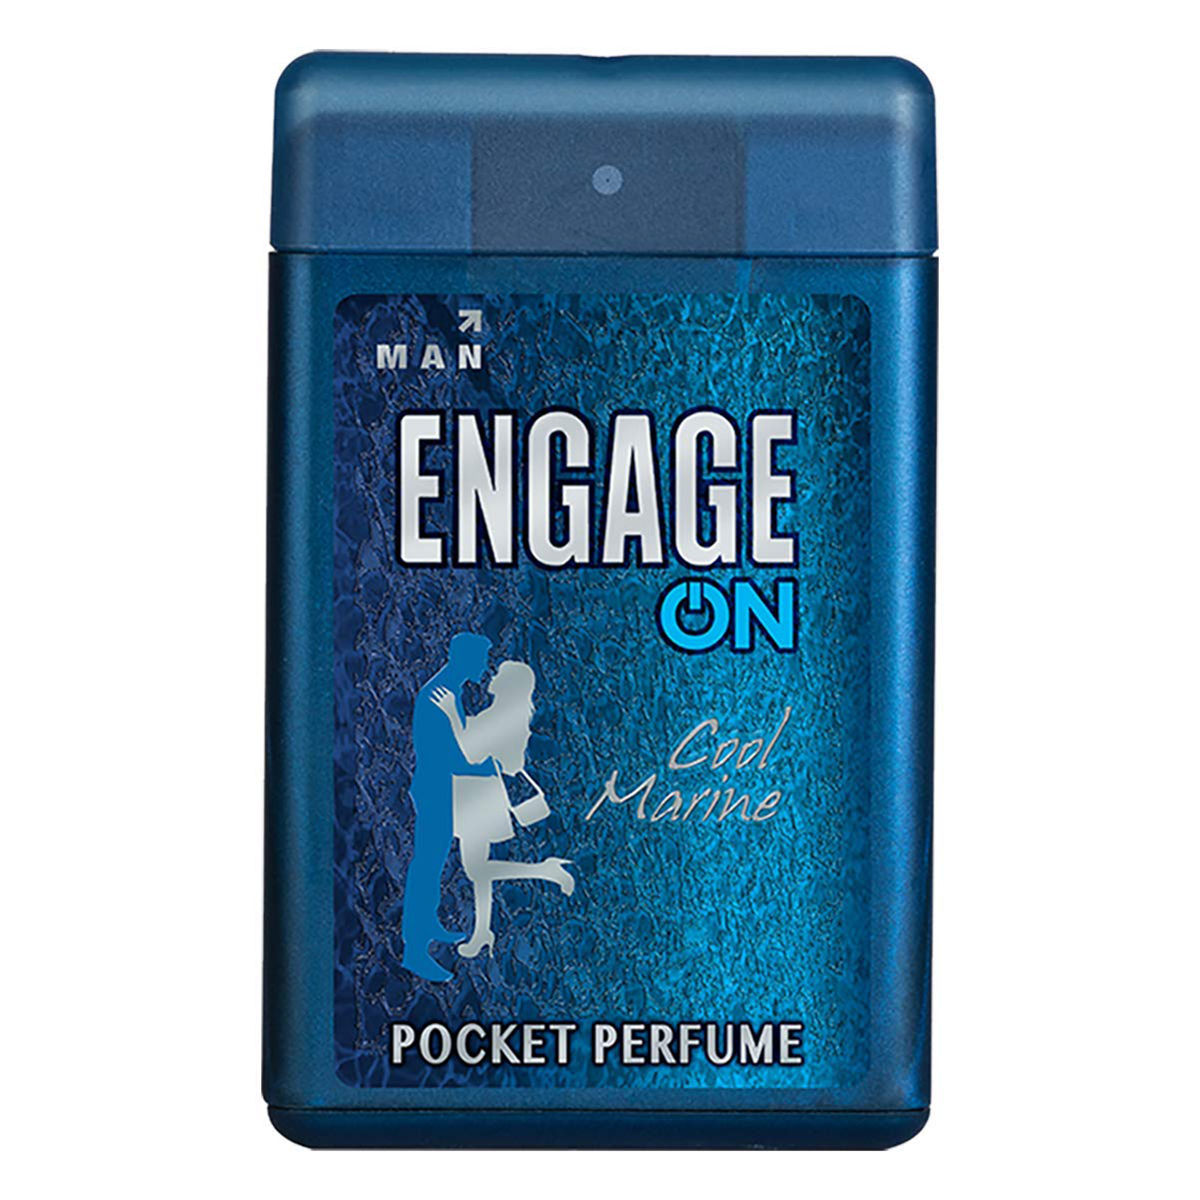 Buy Engage On Cool Marine Pocket Perfume for Men, 18 ml Online